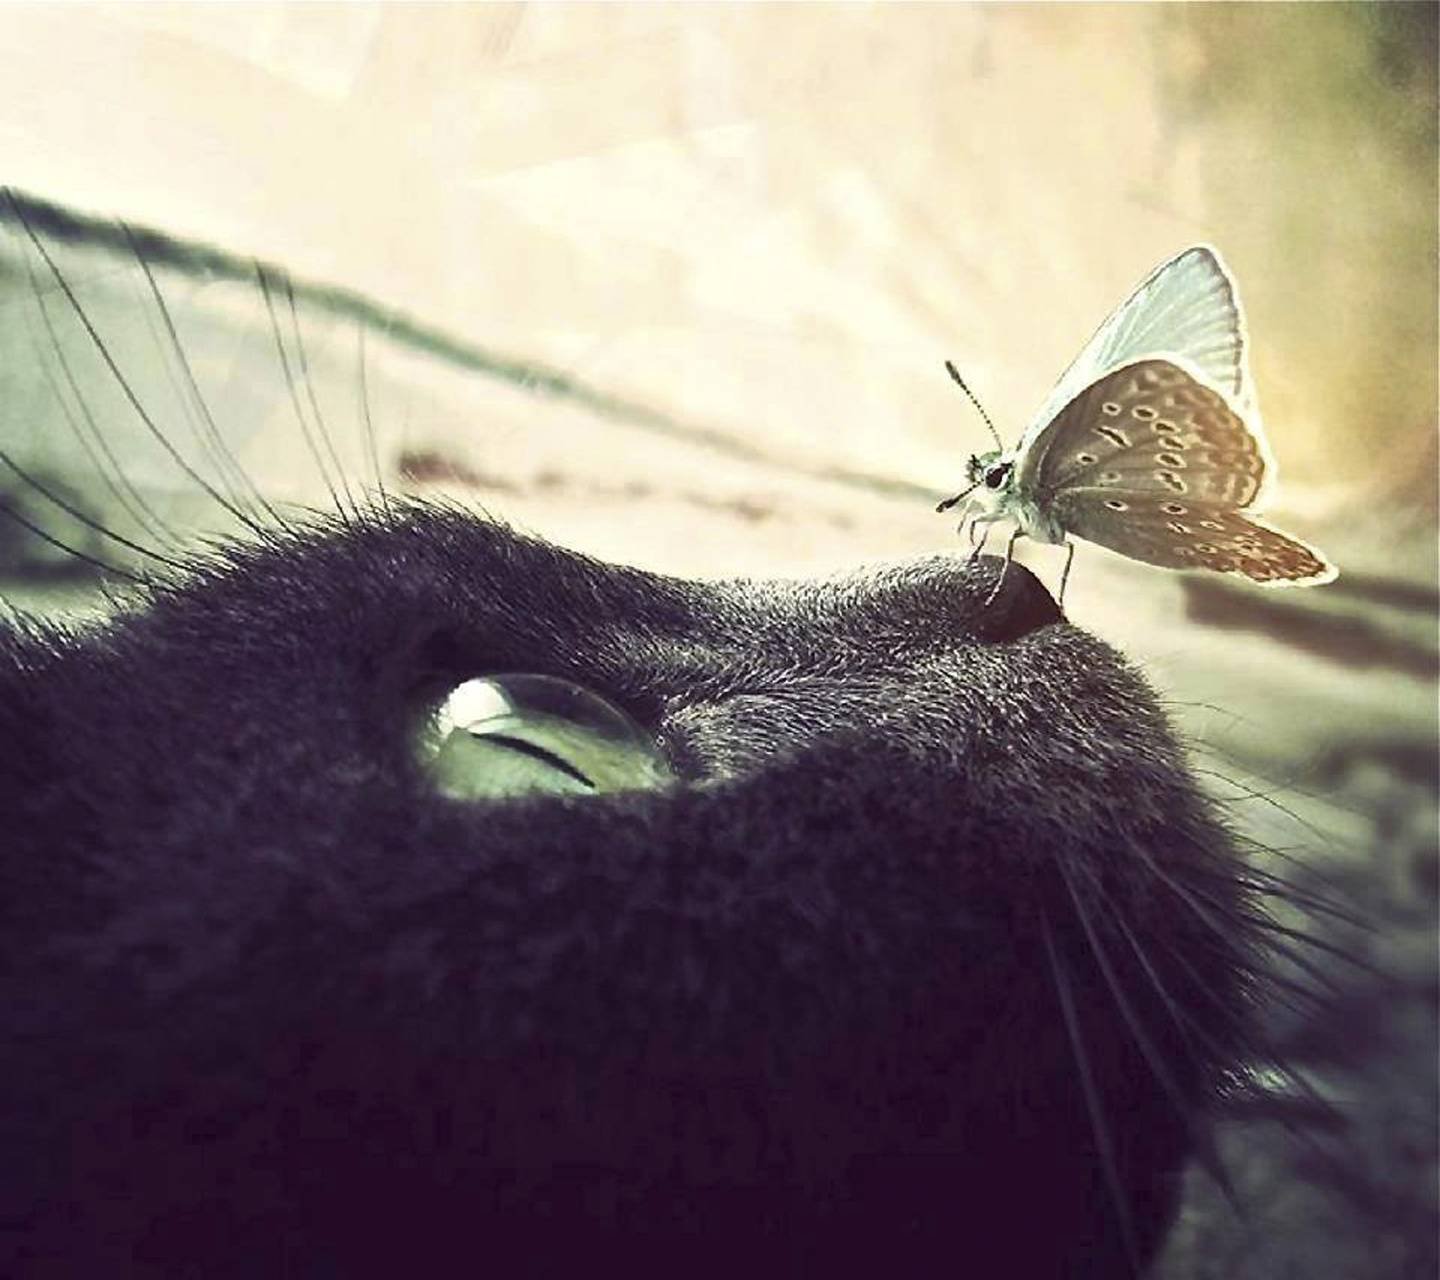 Аватарки с бабочками. Кот и бабочка. Кошка с бабочками. Котик с бабочкой. Кот с бабочкой на носу.